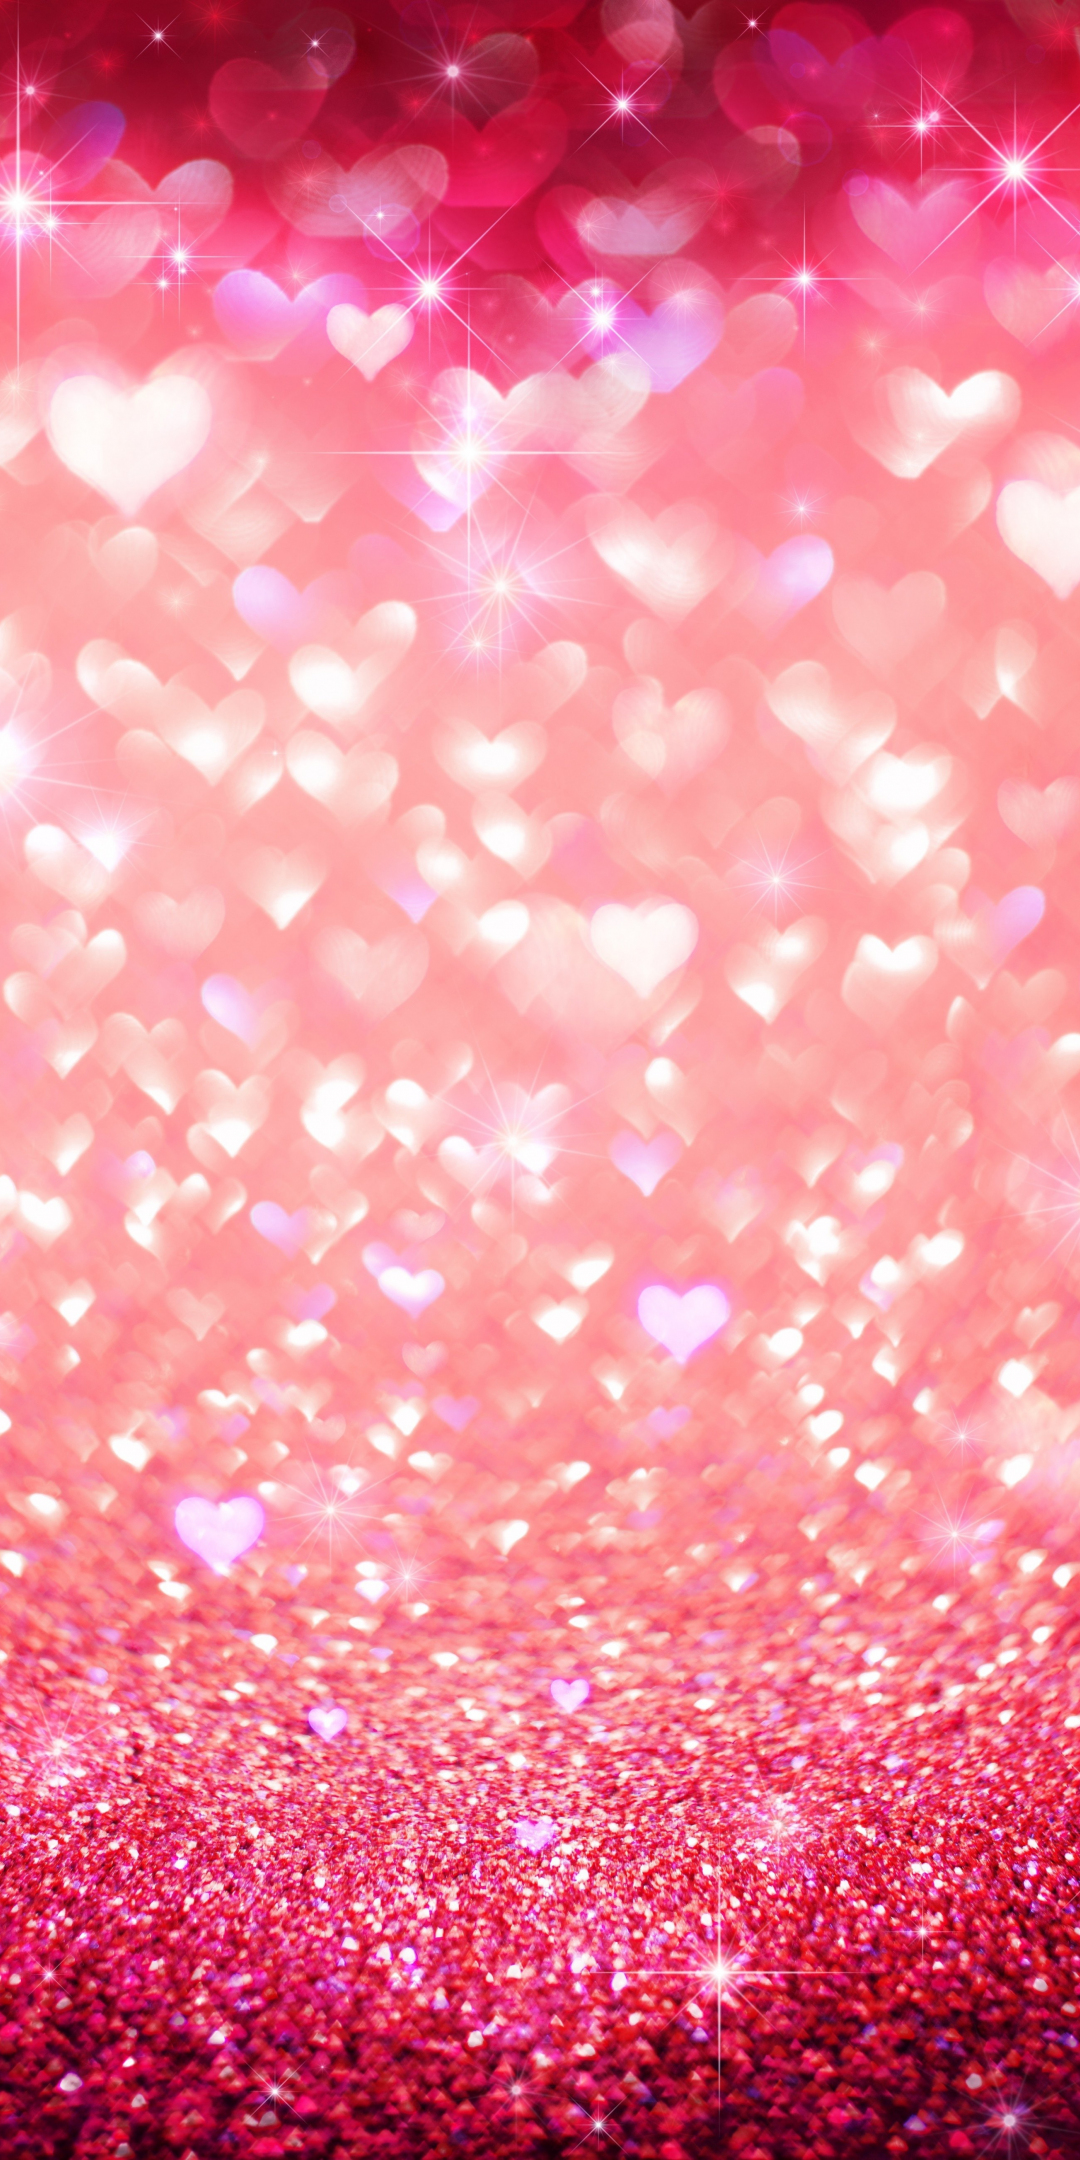 Hearts, glitters, shining, abstract, 1080x2160 wallpaper